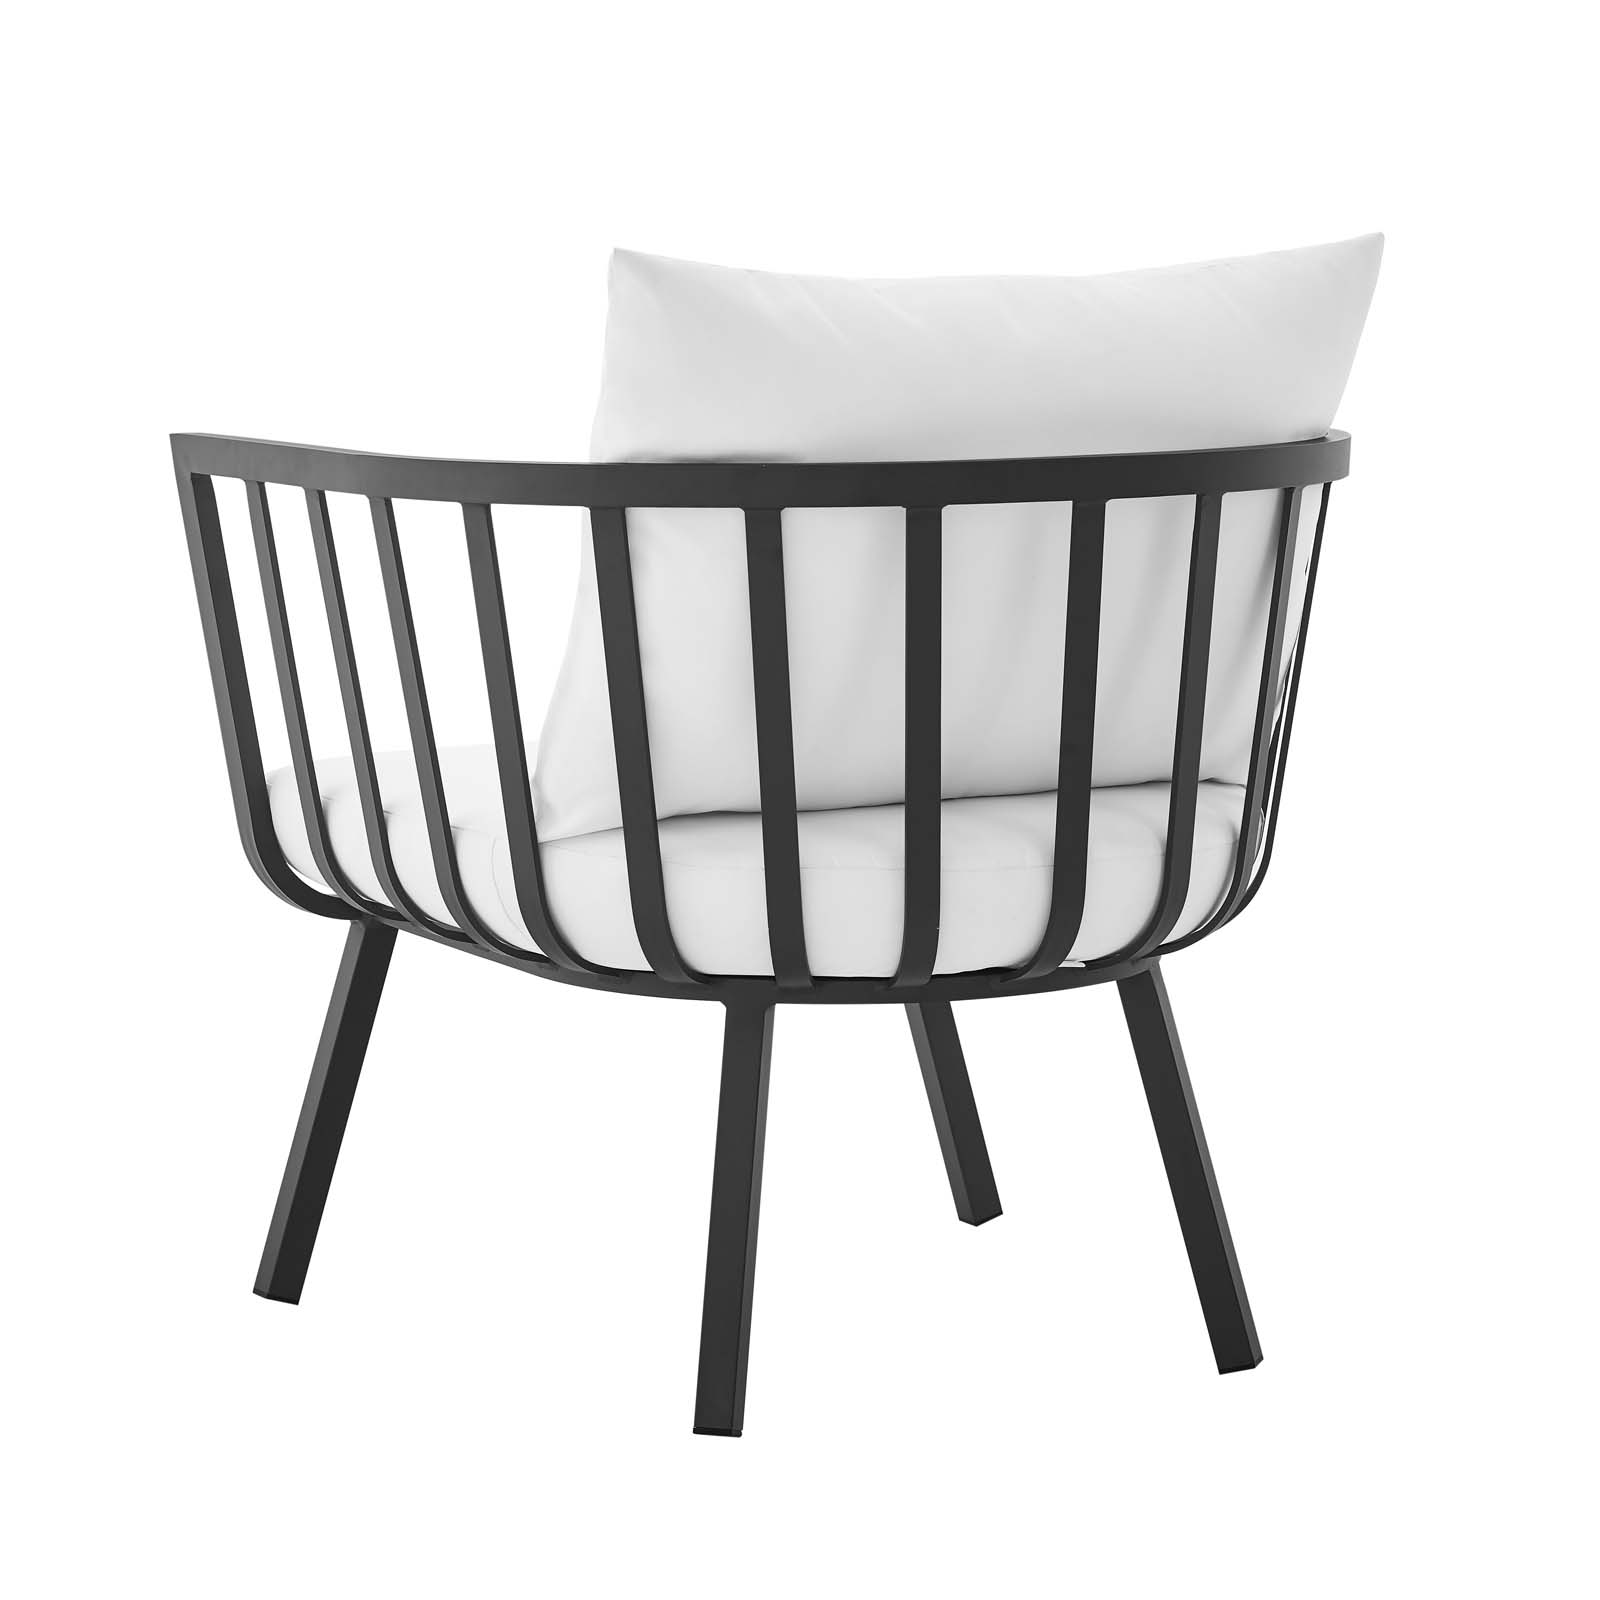 Contemporary Modern Urban Designer Outdoor Patio Balcony Garden Furniture Armchair Lounge Chair, Aluminum Fabric, Grey Gray White - image 2 of 6